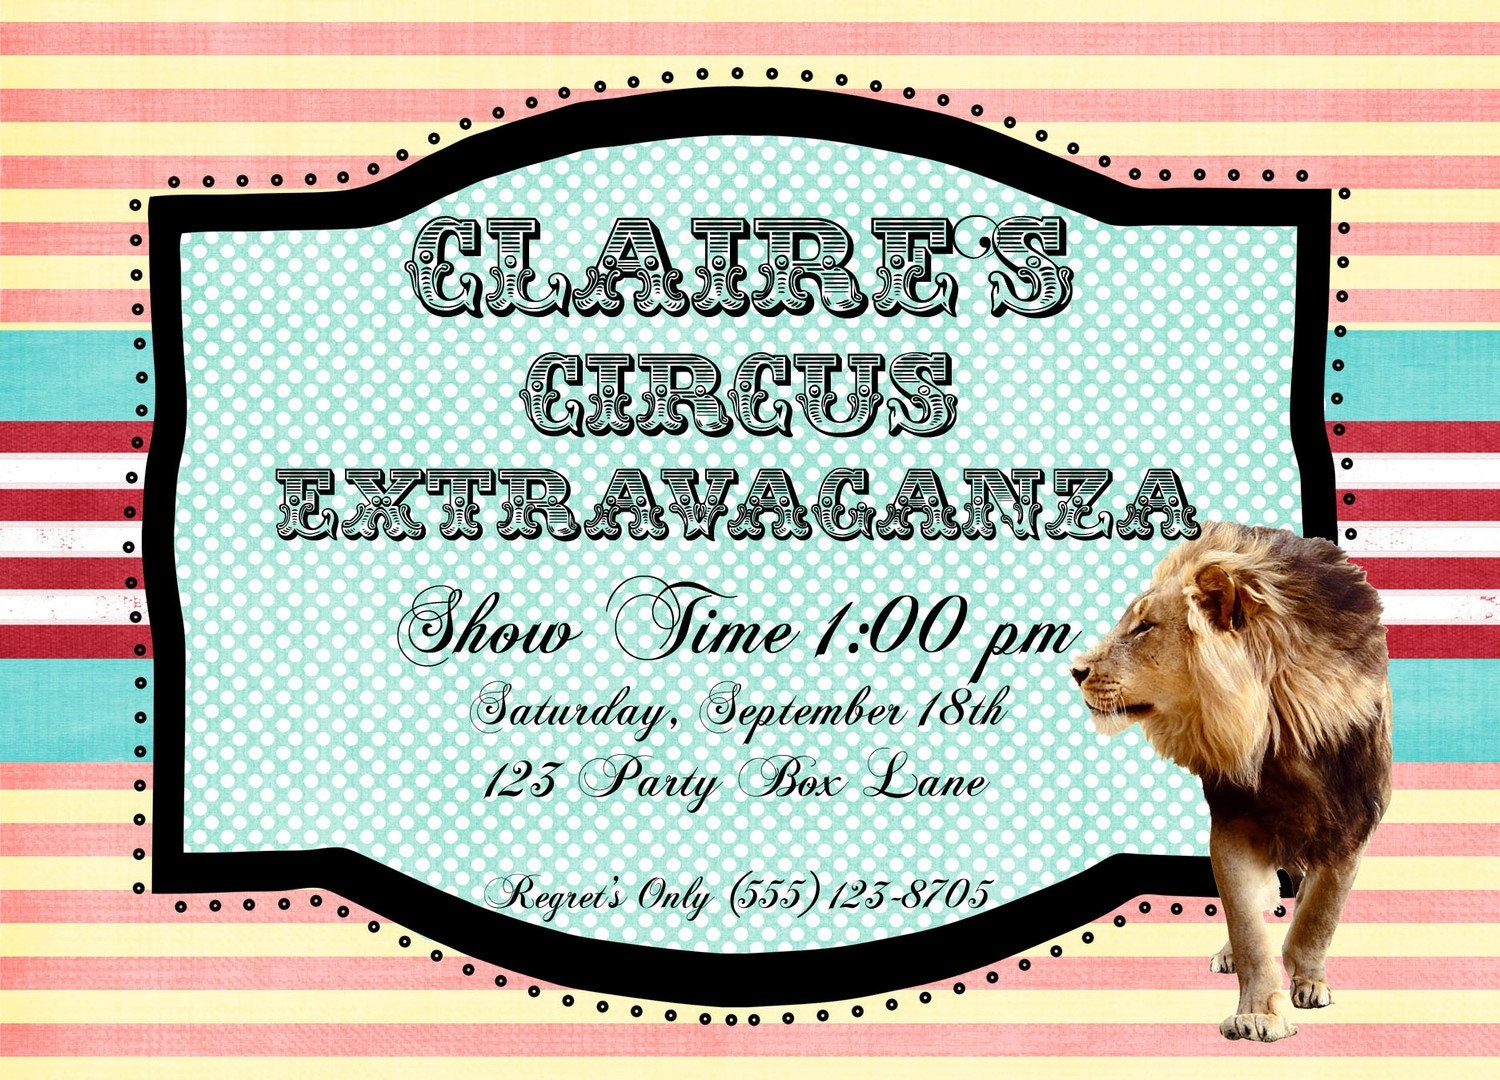 Circus Extravaganza Birthday Invite